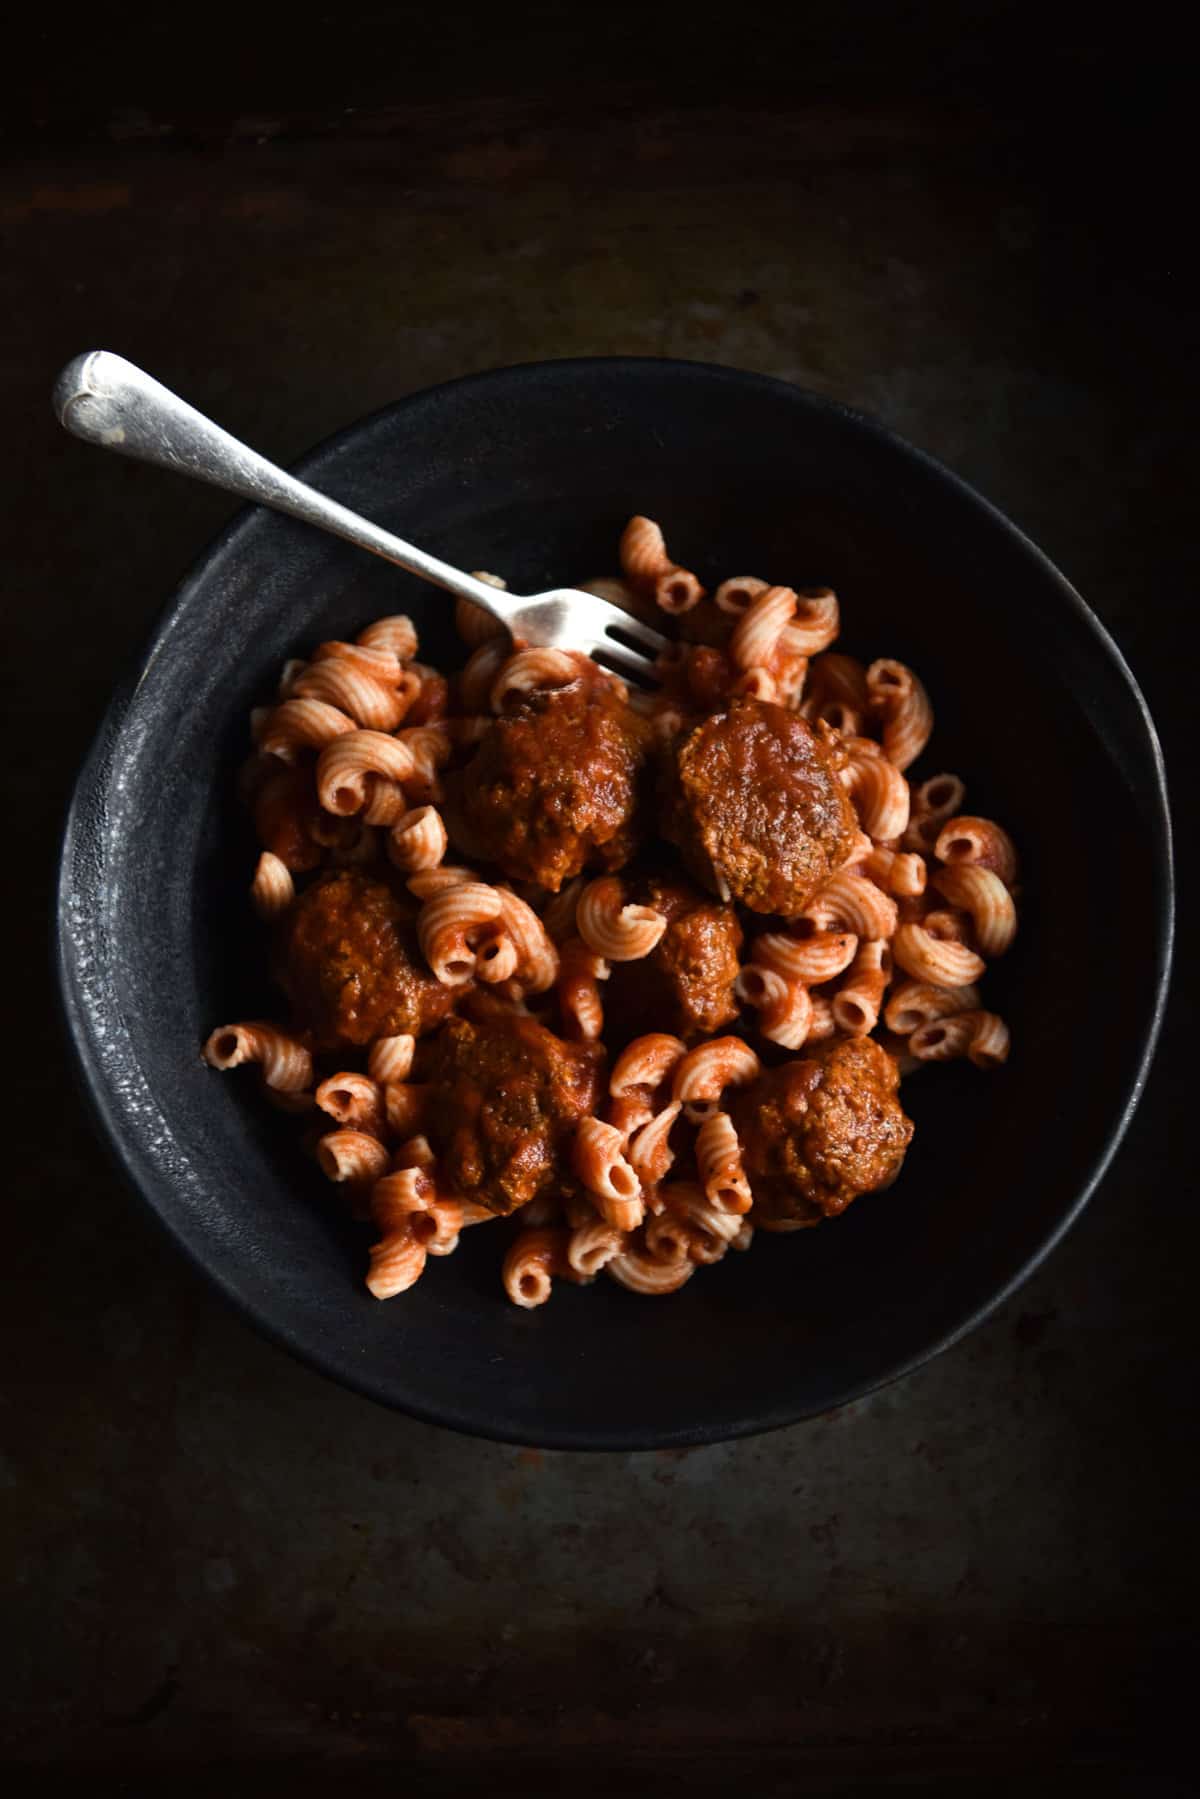 Vegan FODMAP friendly meatballs with a tomato sauce based pasta in a dark ceramic bowl on a dark steel backdrop.